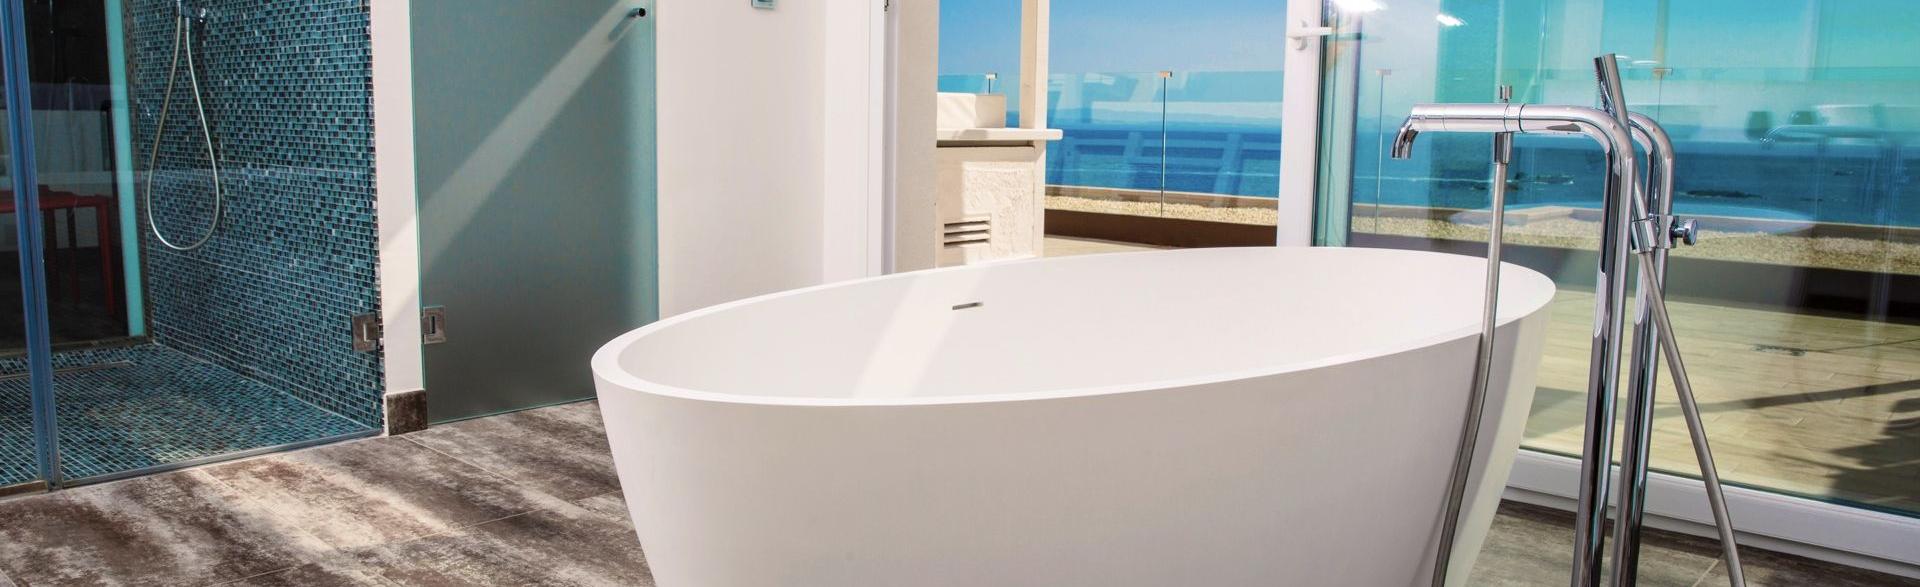 Bathtub with sea views - Penthouse Suite - Hotel Vistabella